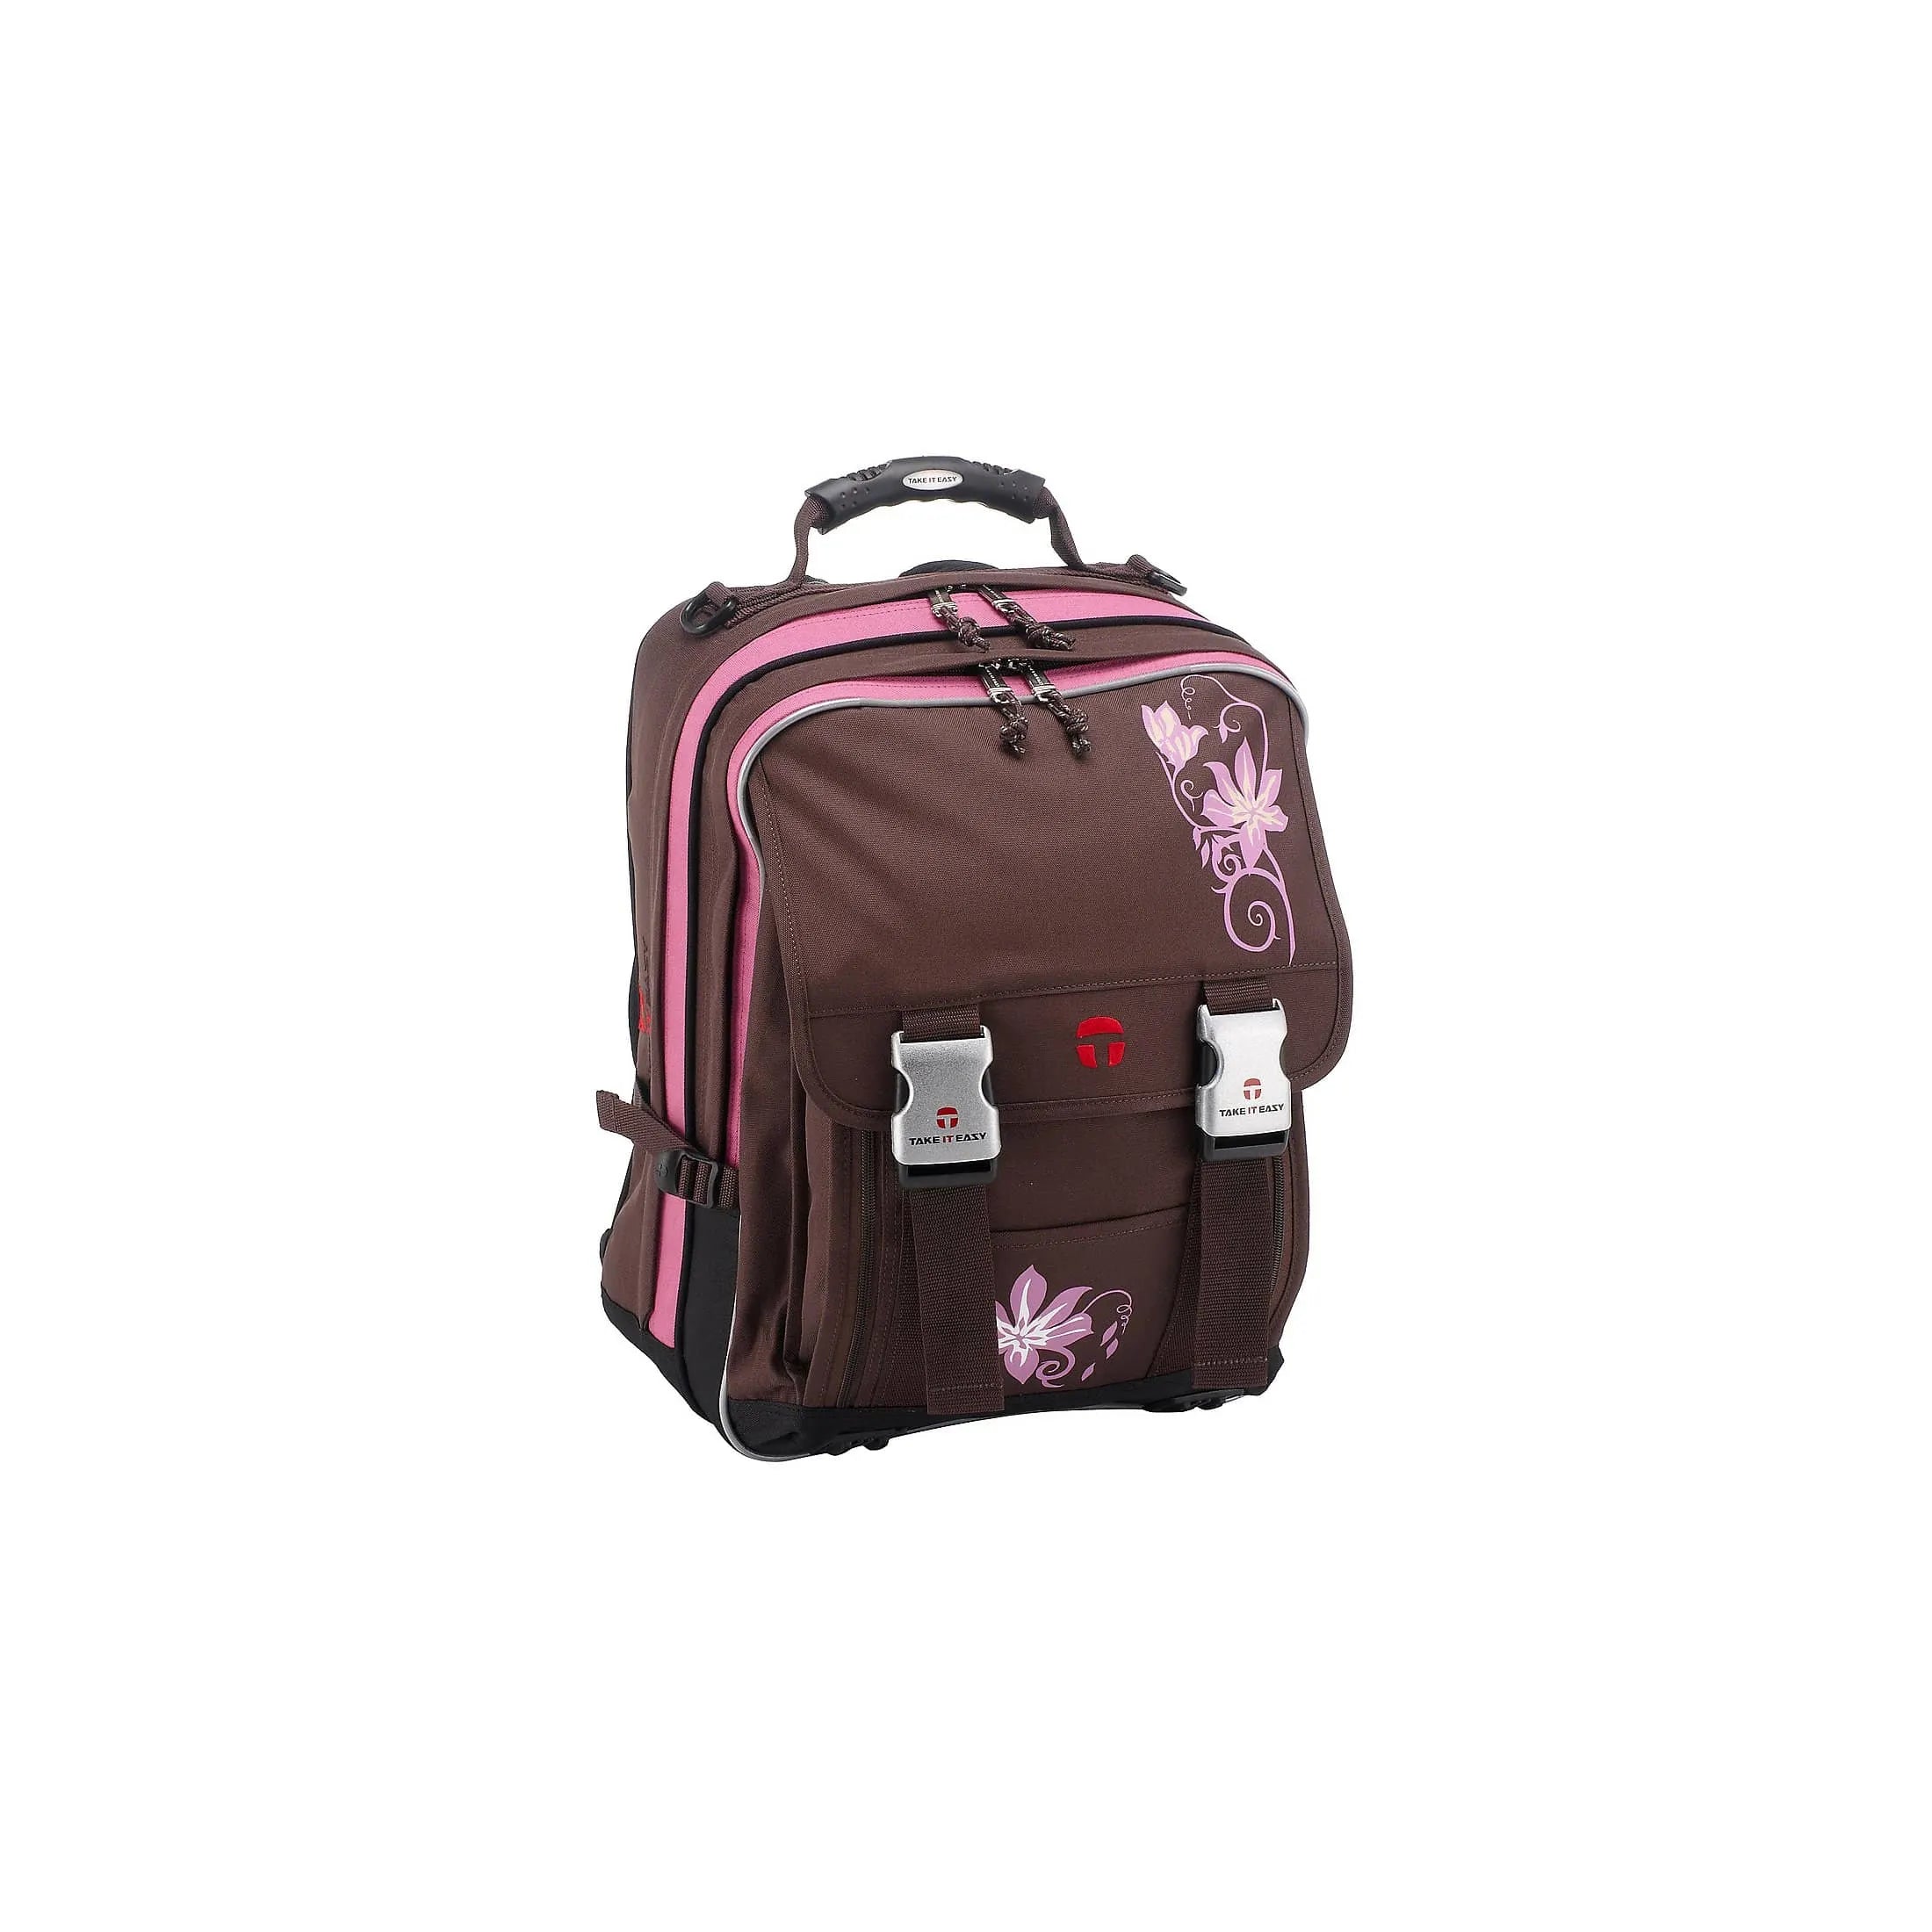 Take it Easy Actionbags school backpack London 40 cm - fantasy pink